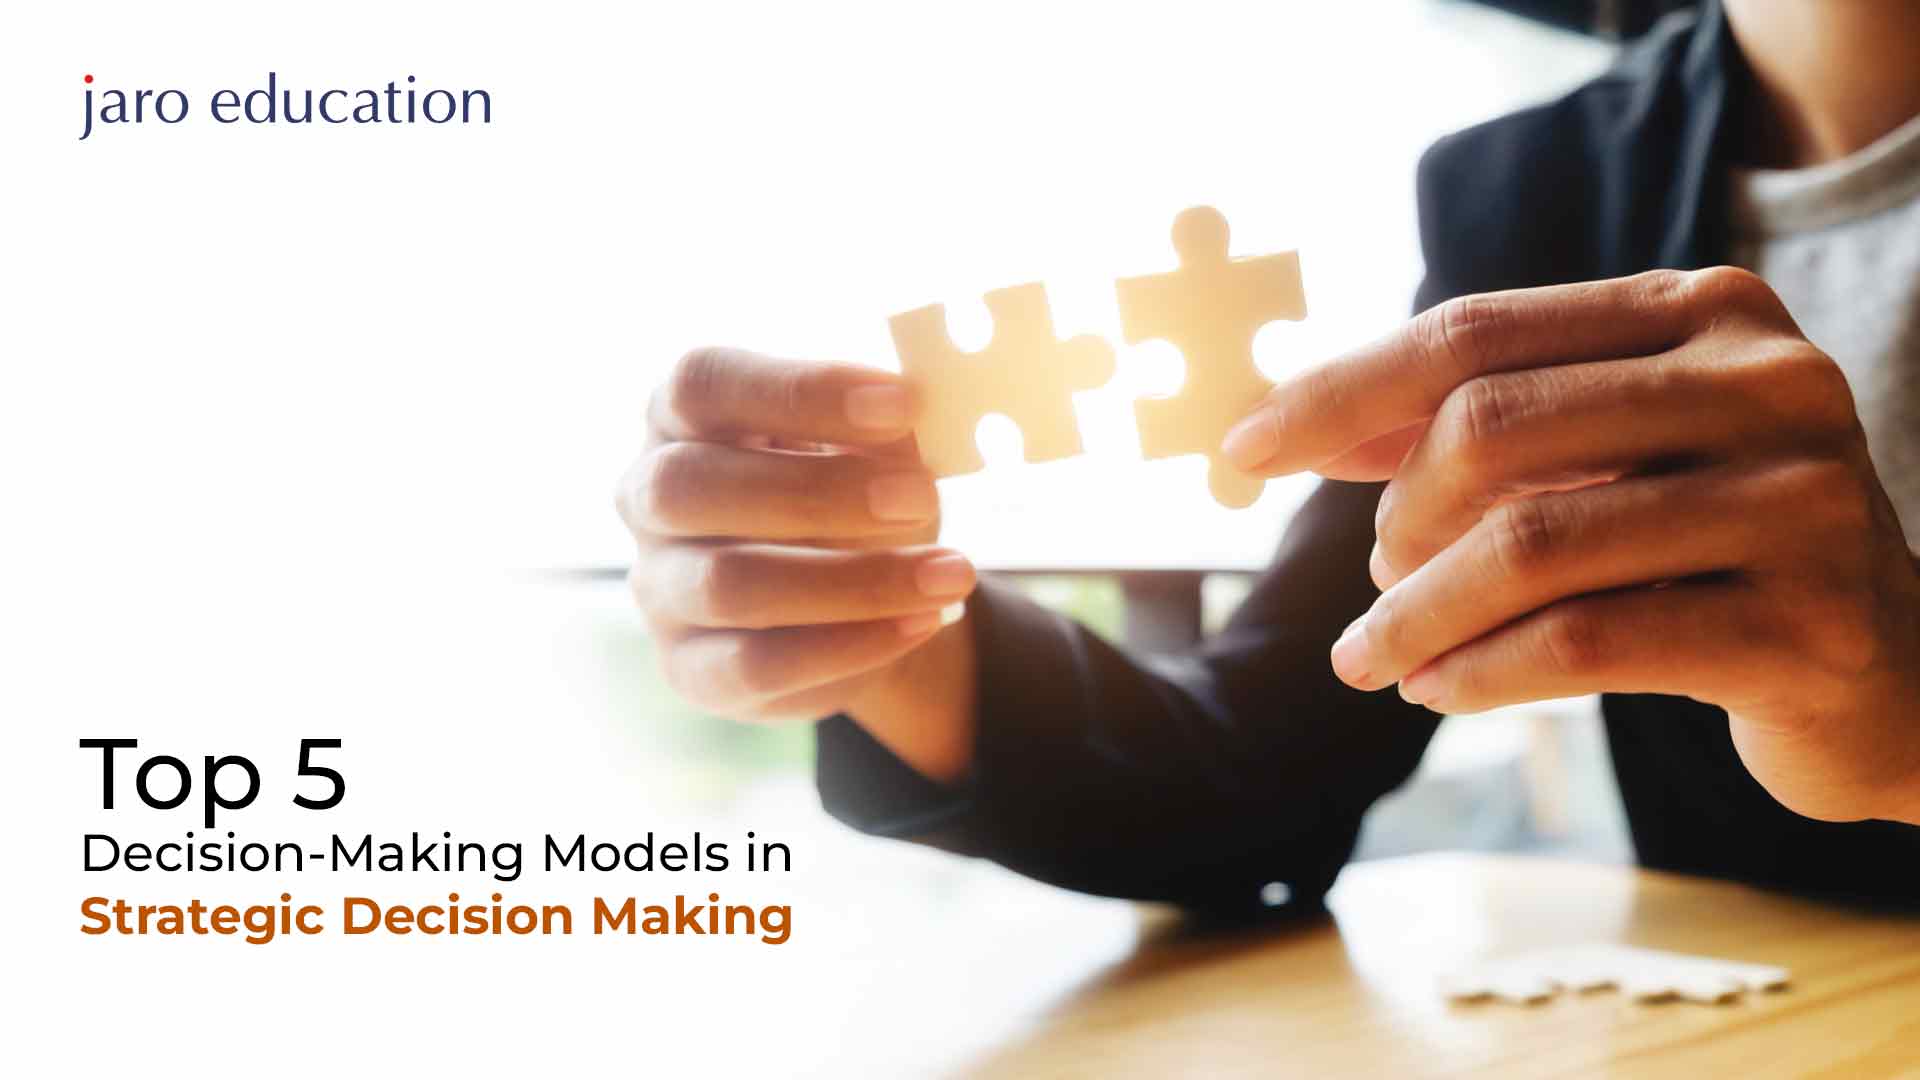 Top-5-Decision-Making-Models-in-Strategic-Decision-Making-Jaro